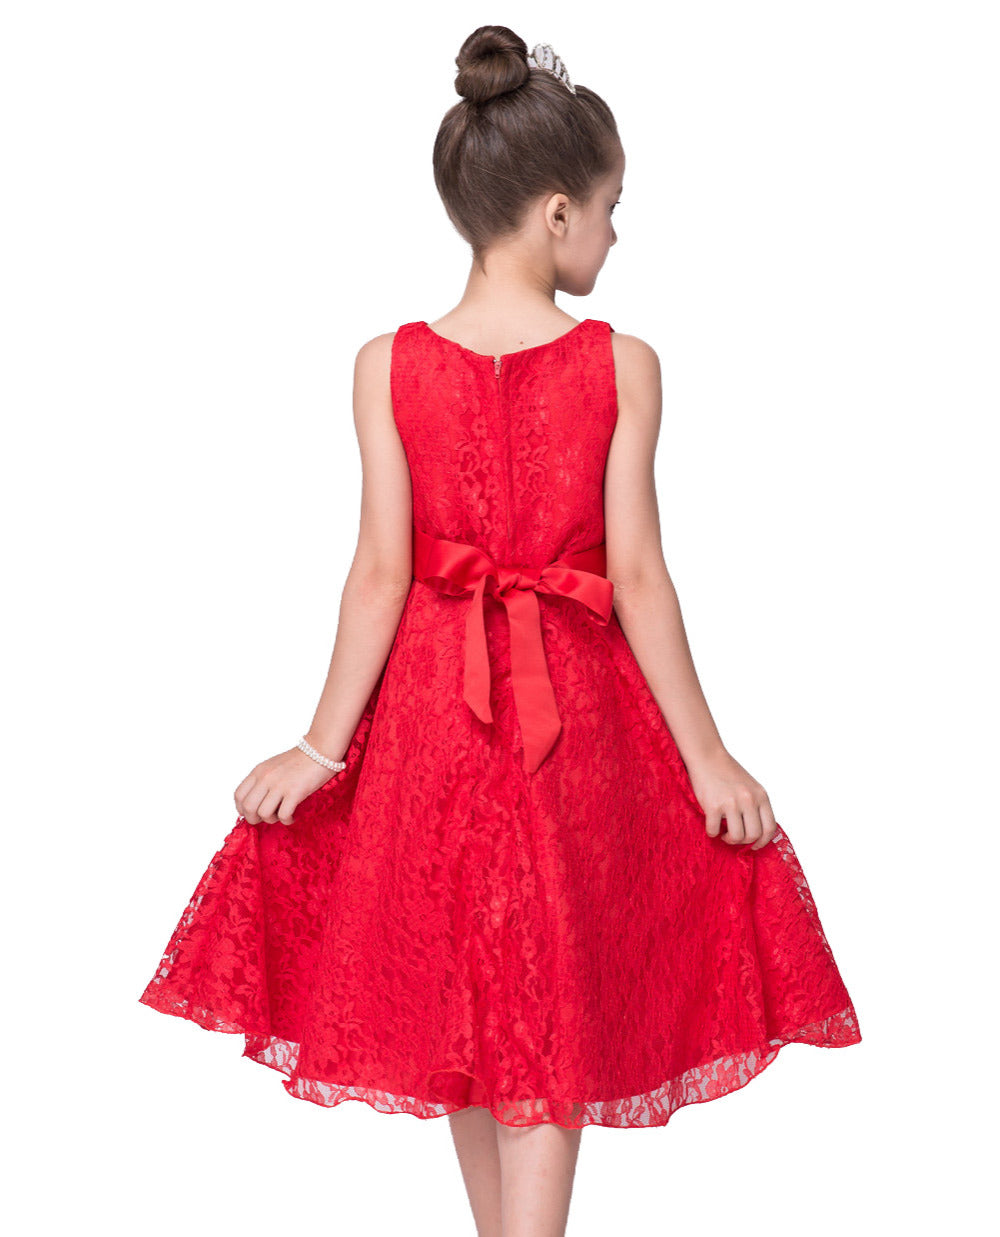 Red Lace Sleeveless Dress, Size 4-14 Yrs